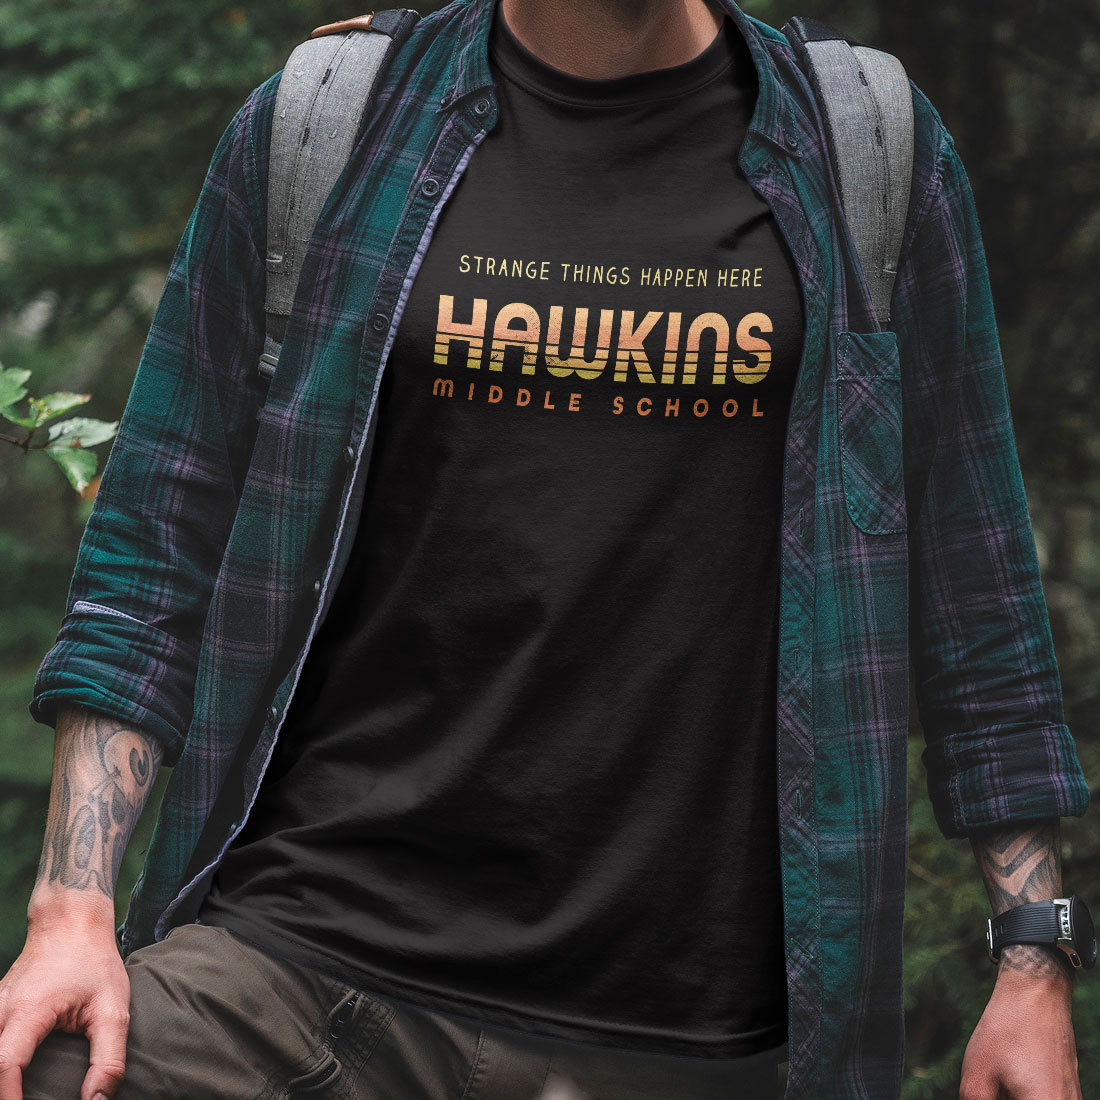 Hawkins Middle School - Stranger Things T-Shirt